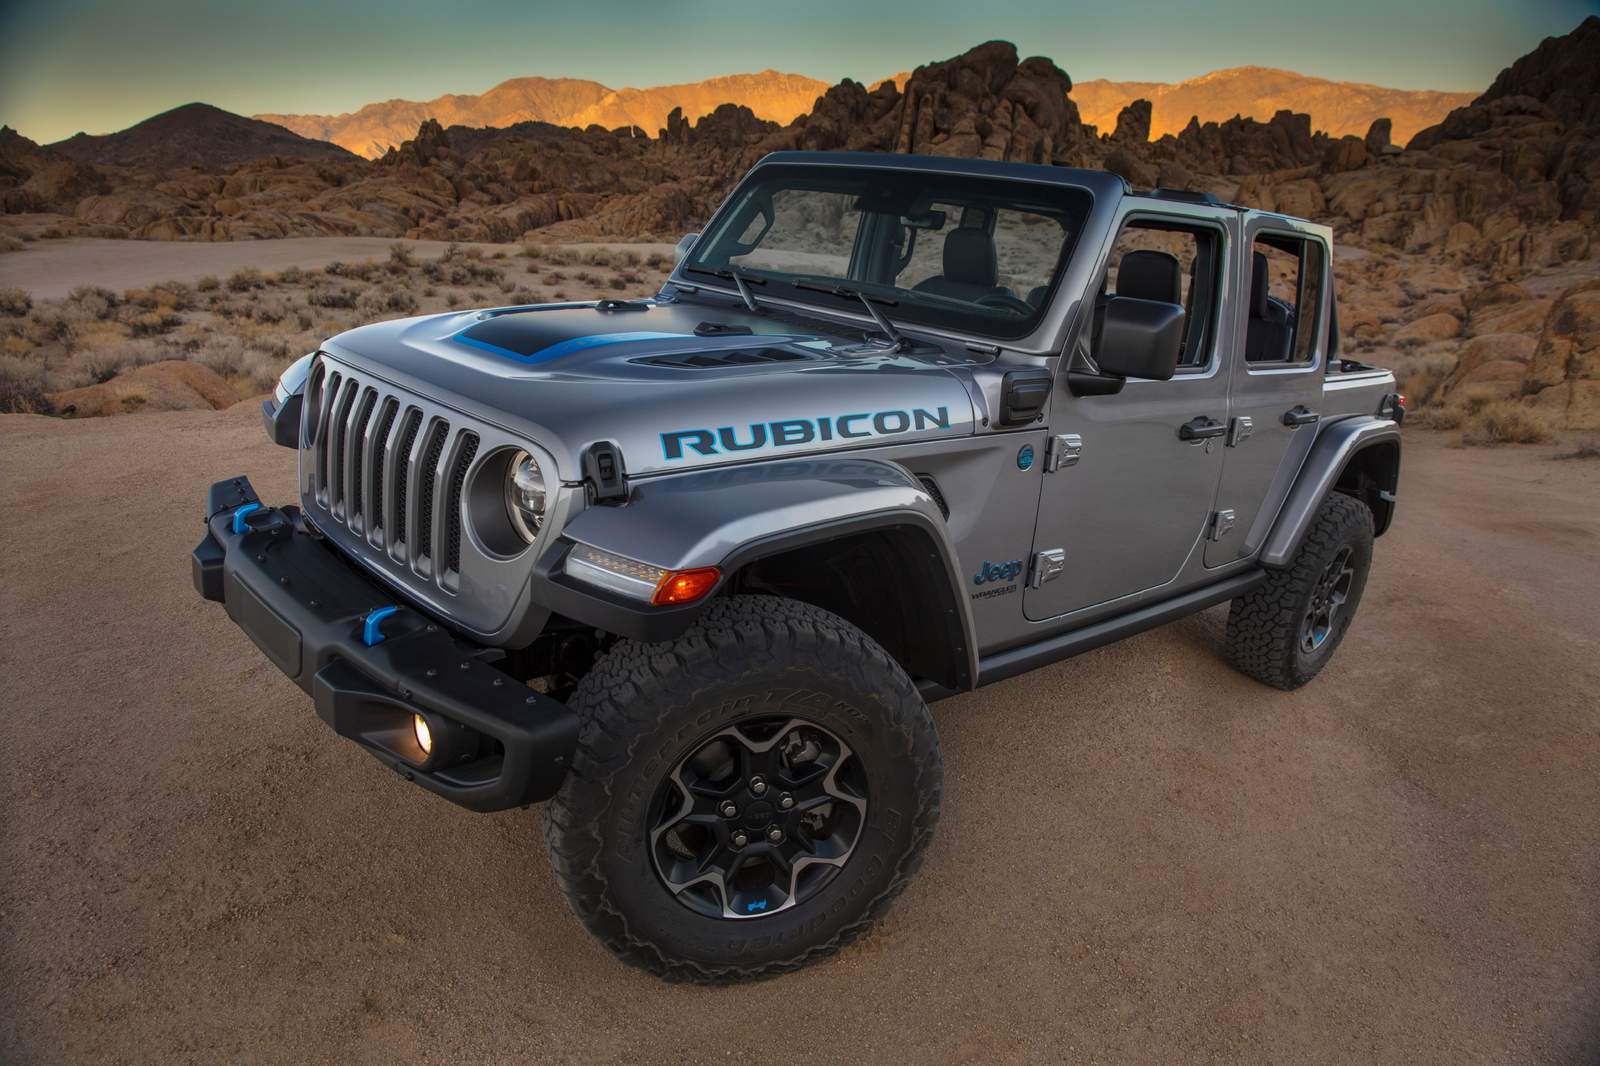 Jeep reveals hybrid Wrangler, 1st US battery-powered vehicle